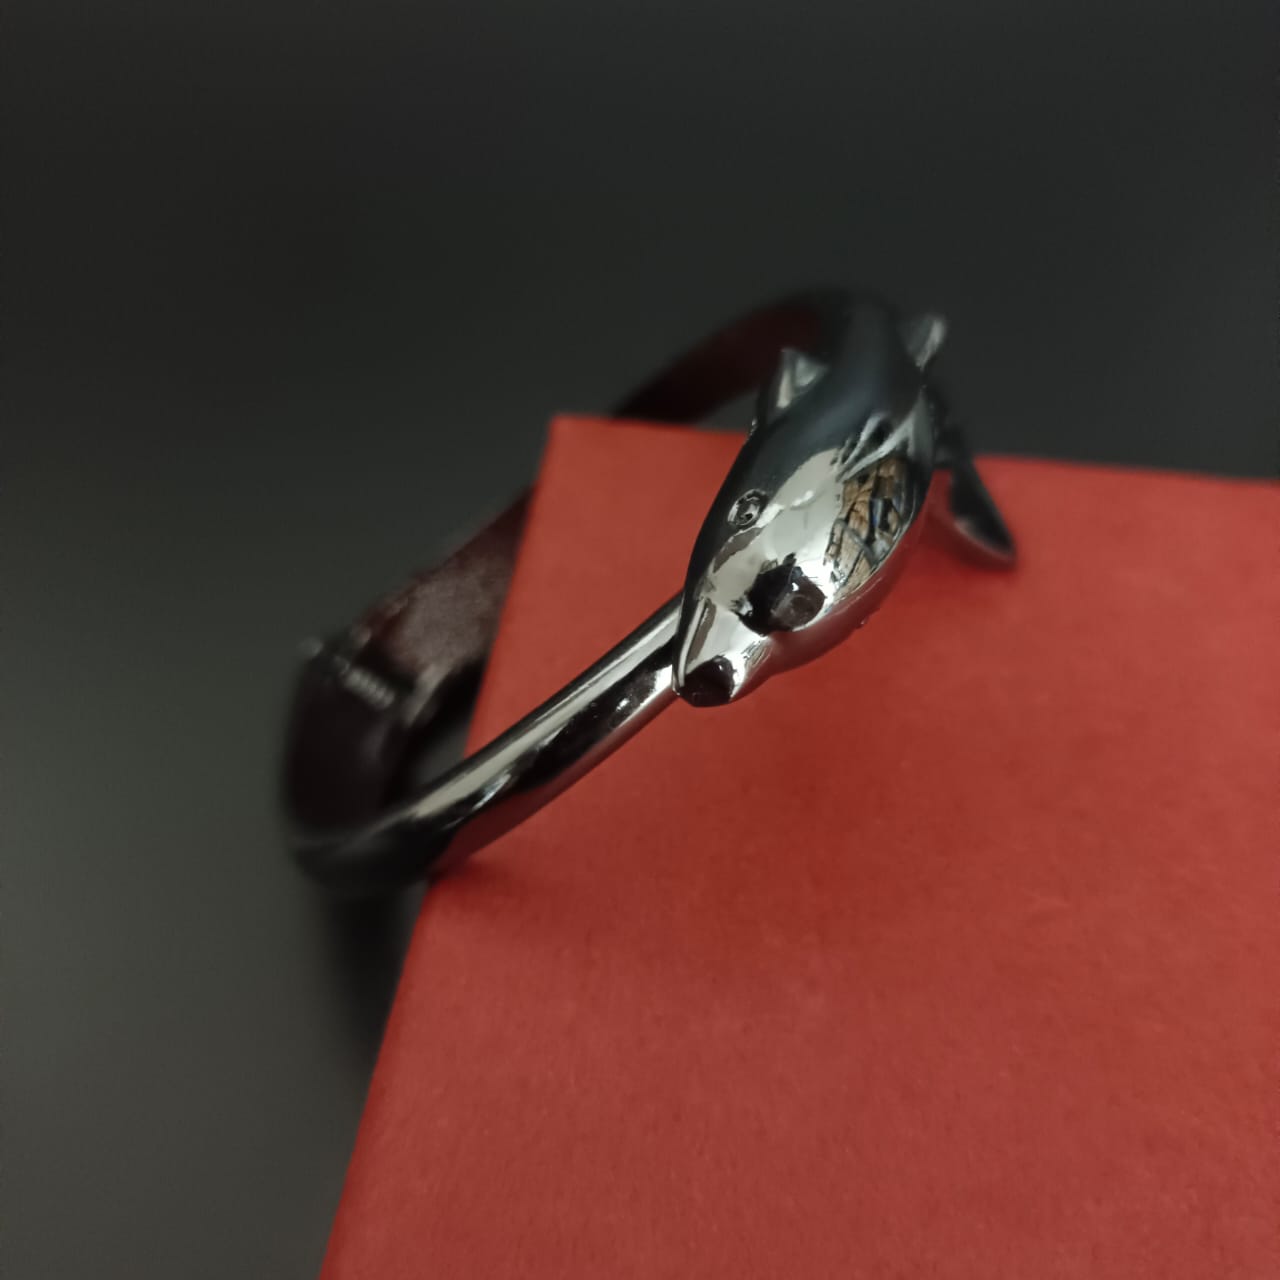 New Silver Dolphin Design Bracelet For Women and Girl-Jack Marc